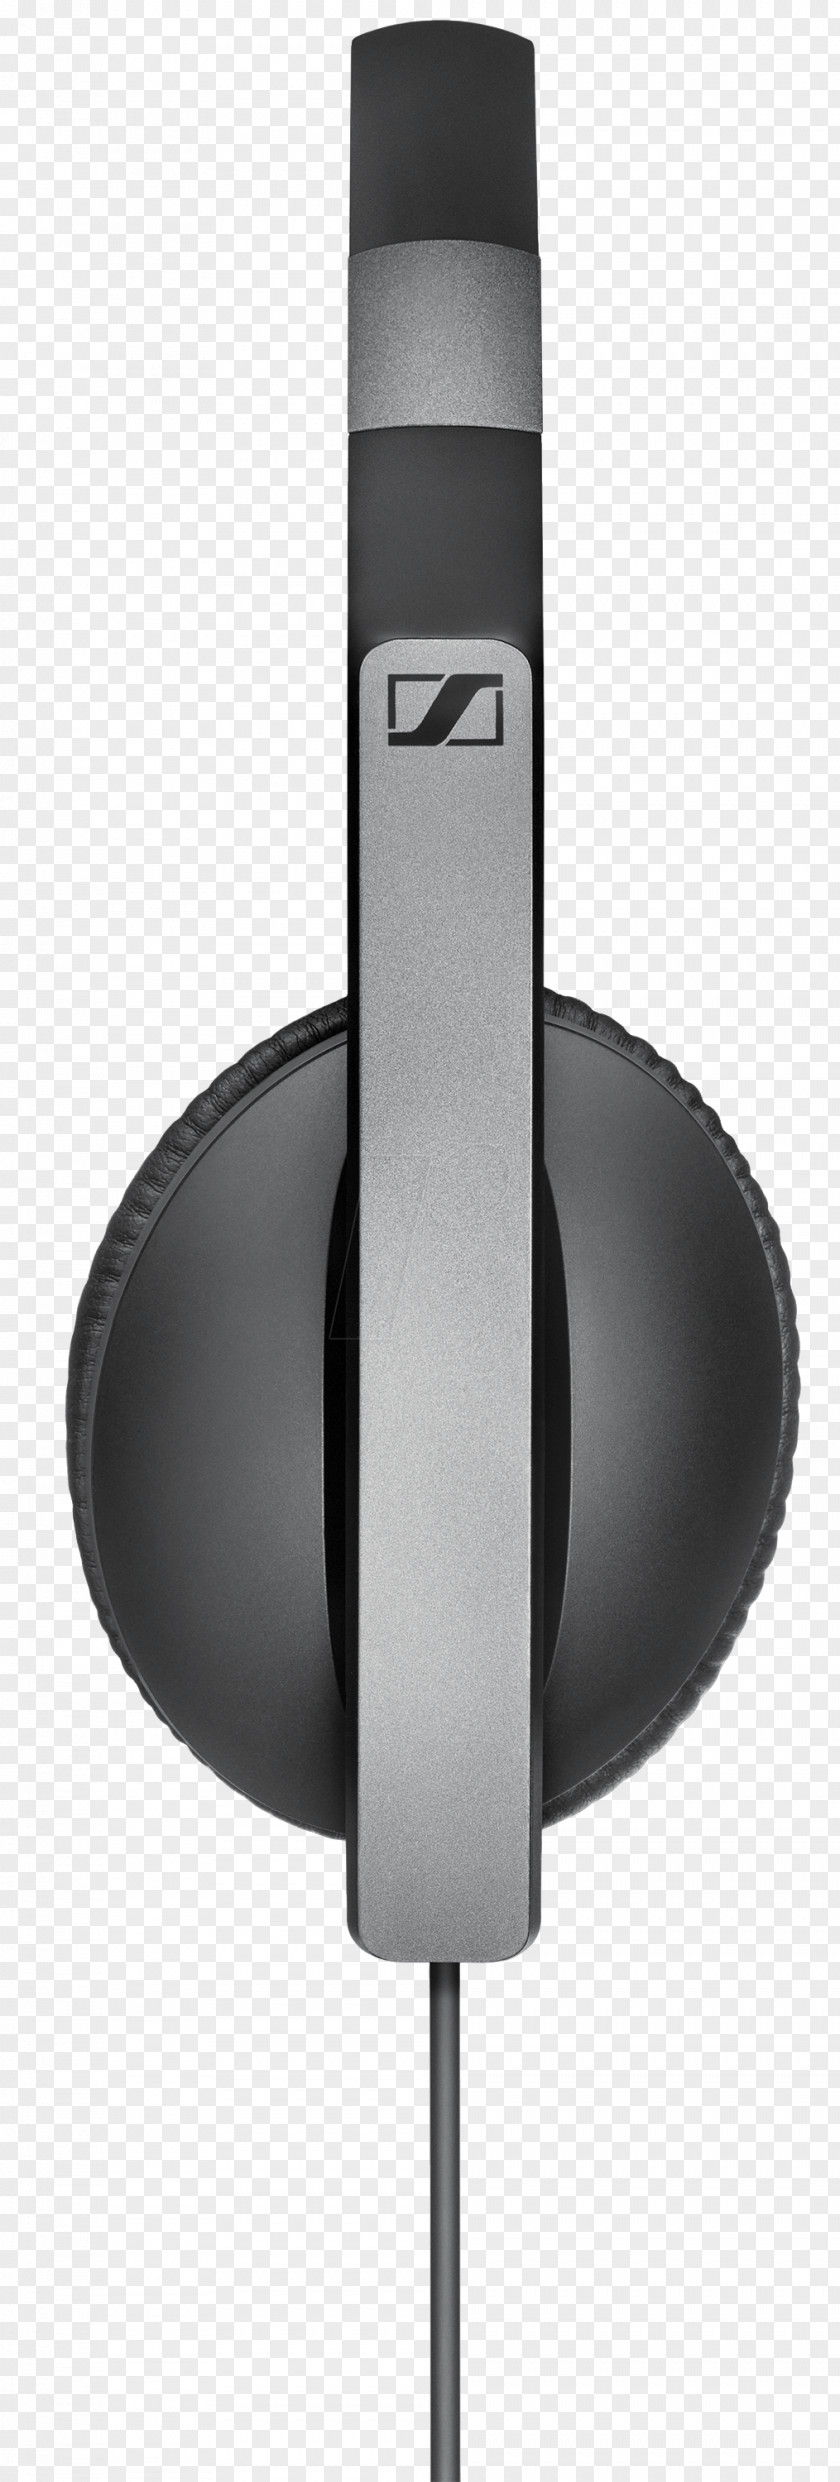 Ear Headphones Sennheiser Microphone Amazon.com Mobile Phones PNG